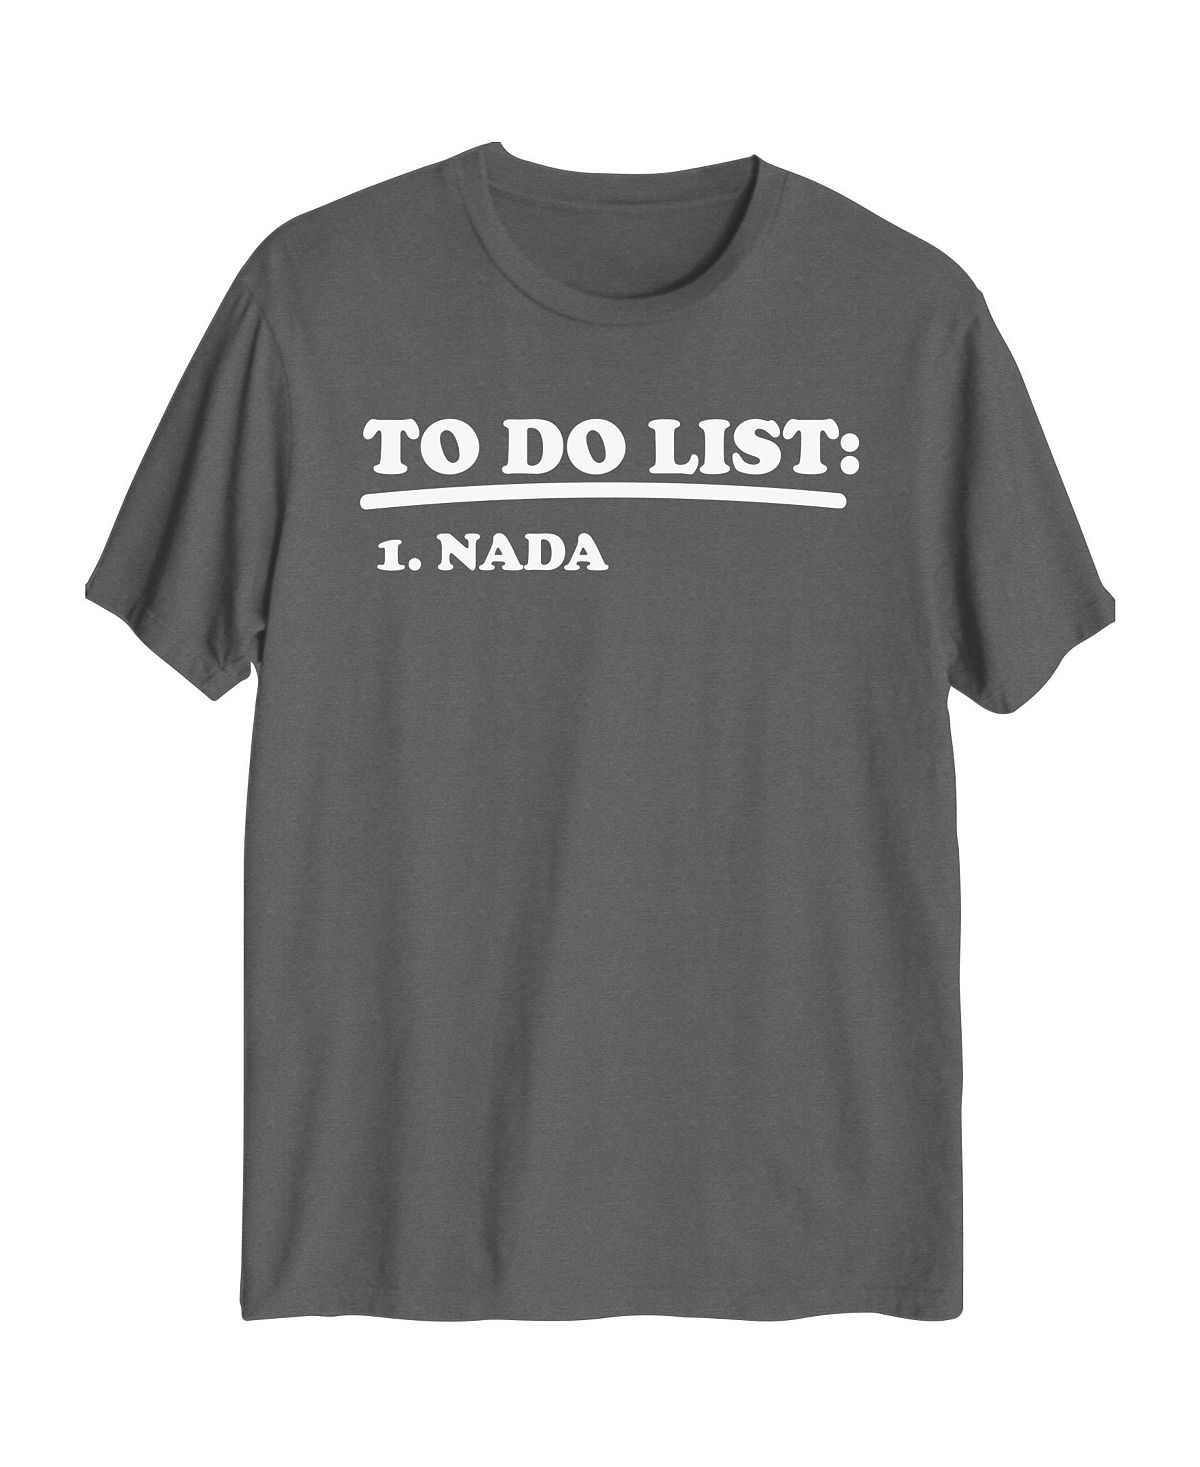 цена Мужская гибридная футболка с рисунком Nada AIRWAVES